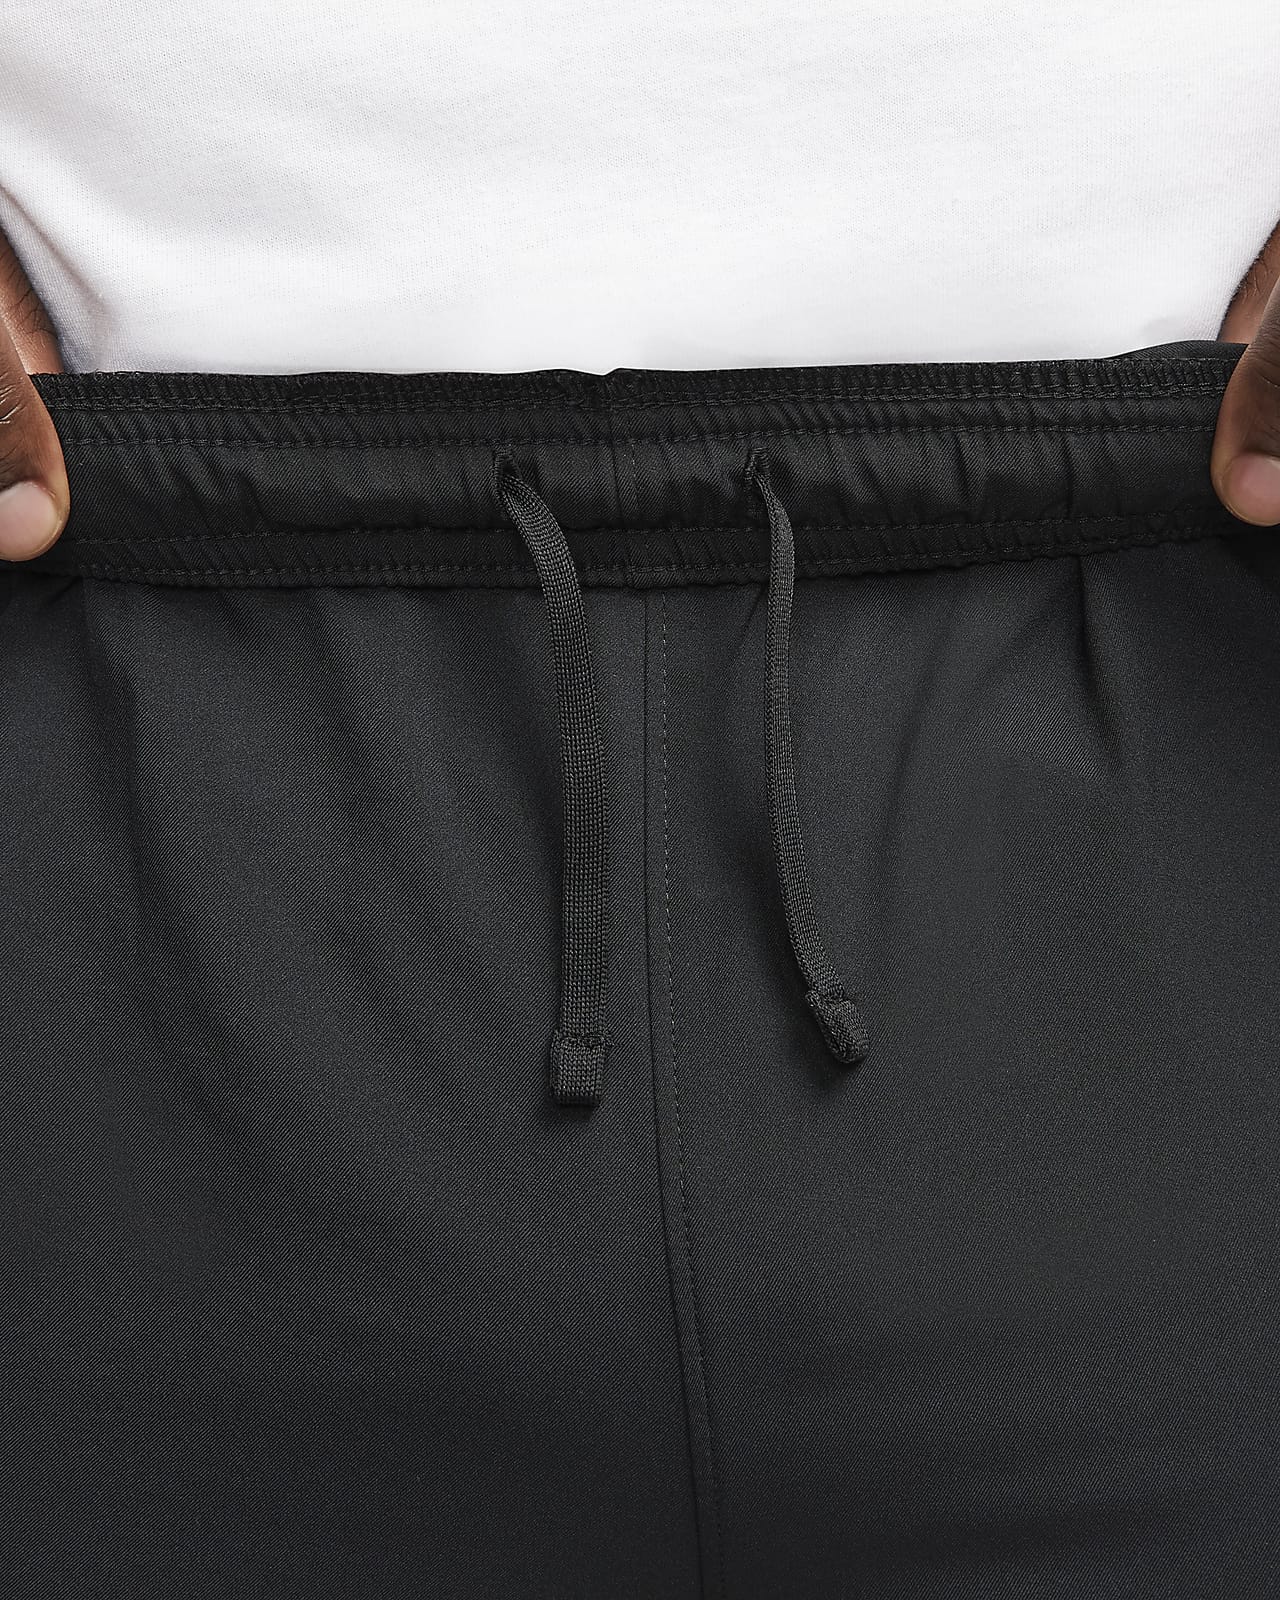 Nike Men's Core Dri-FIT Challenger Woven Pant Grey